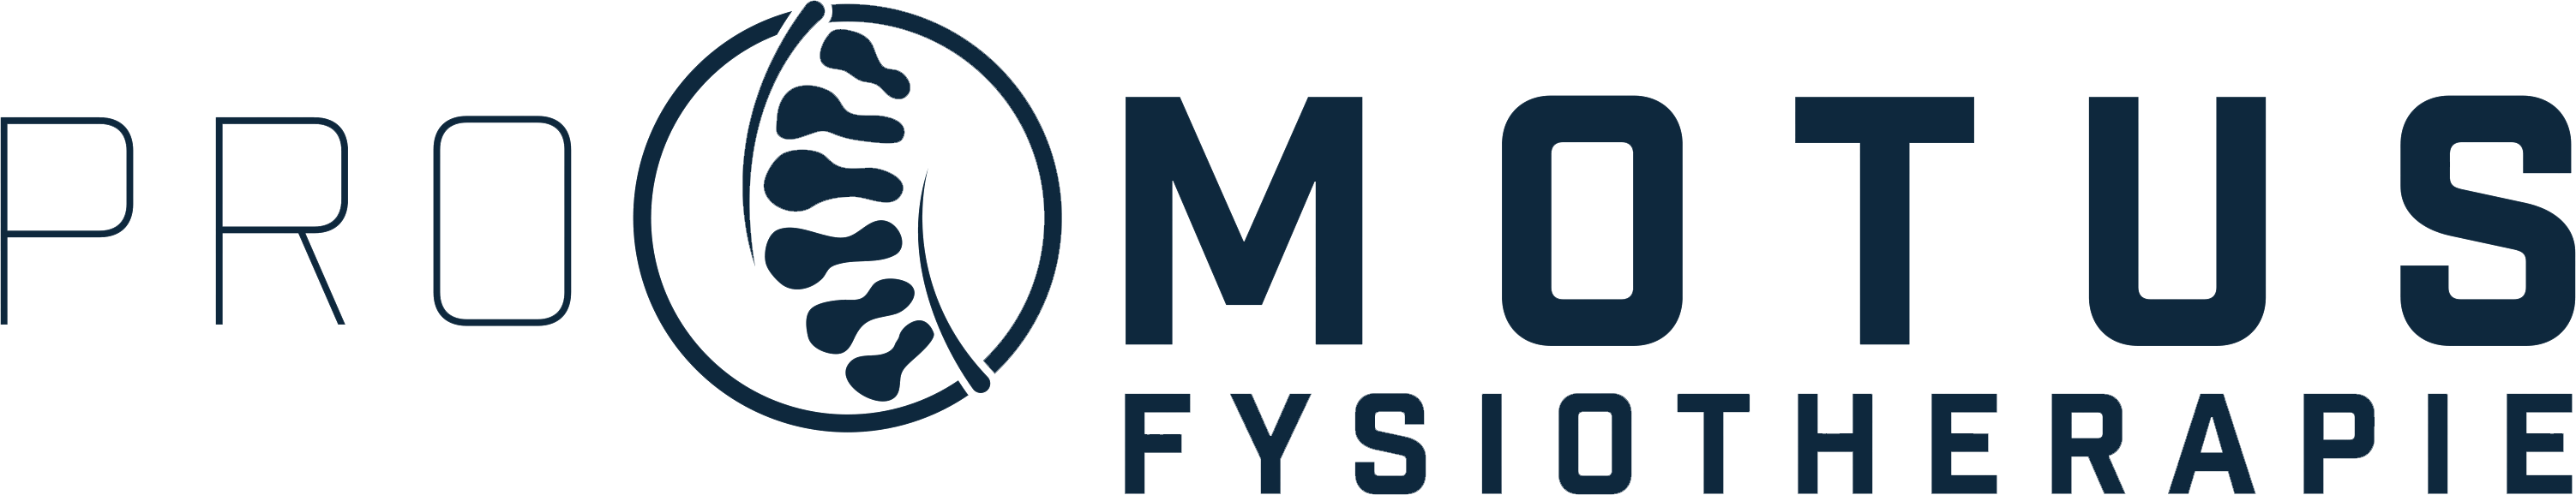 promotus-logo-mobile-retina